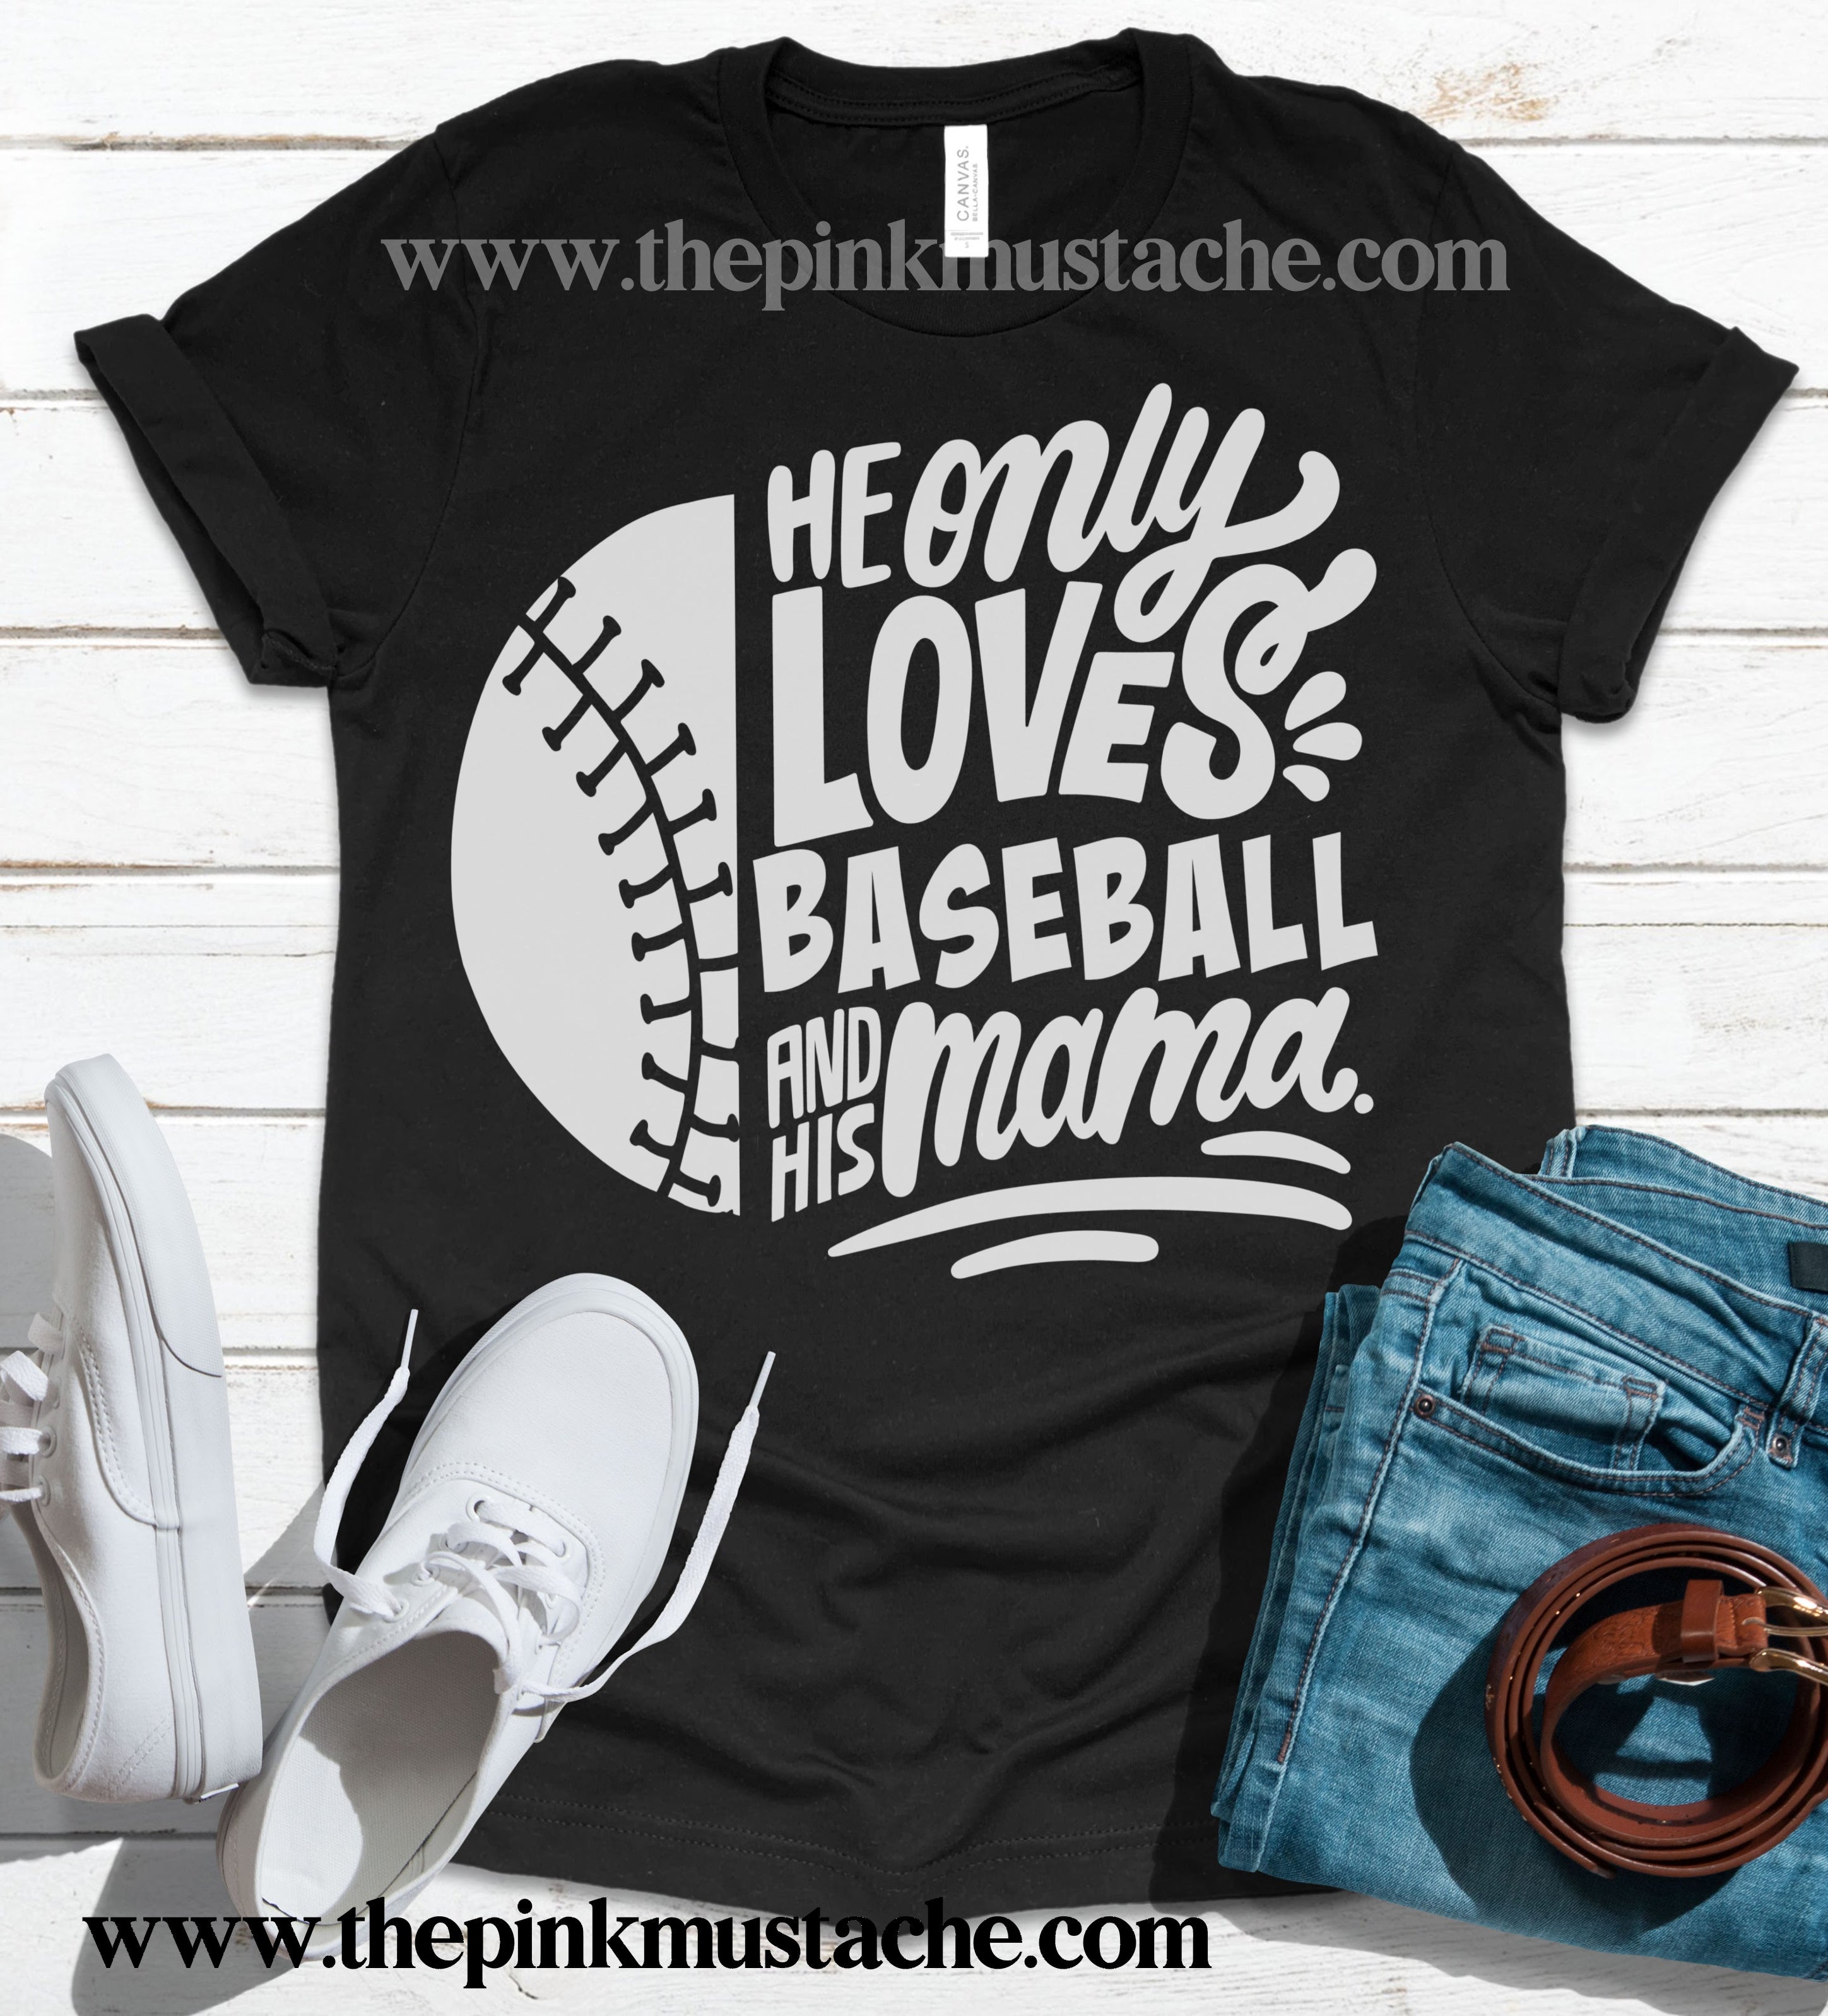 Baseball Mom| Bleached Stitch | T shirt